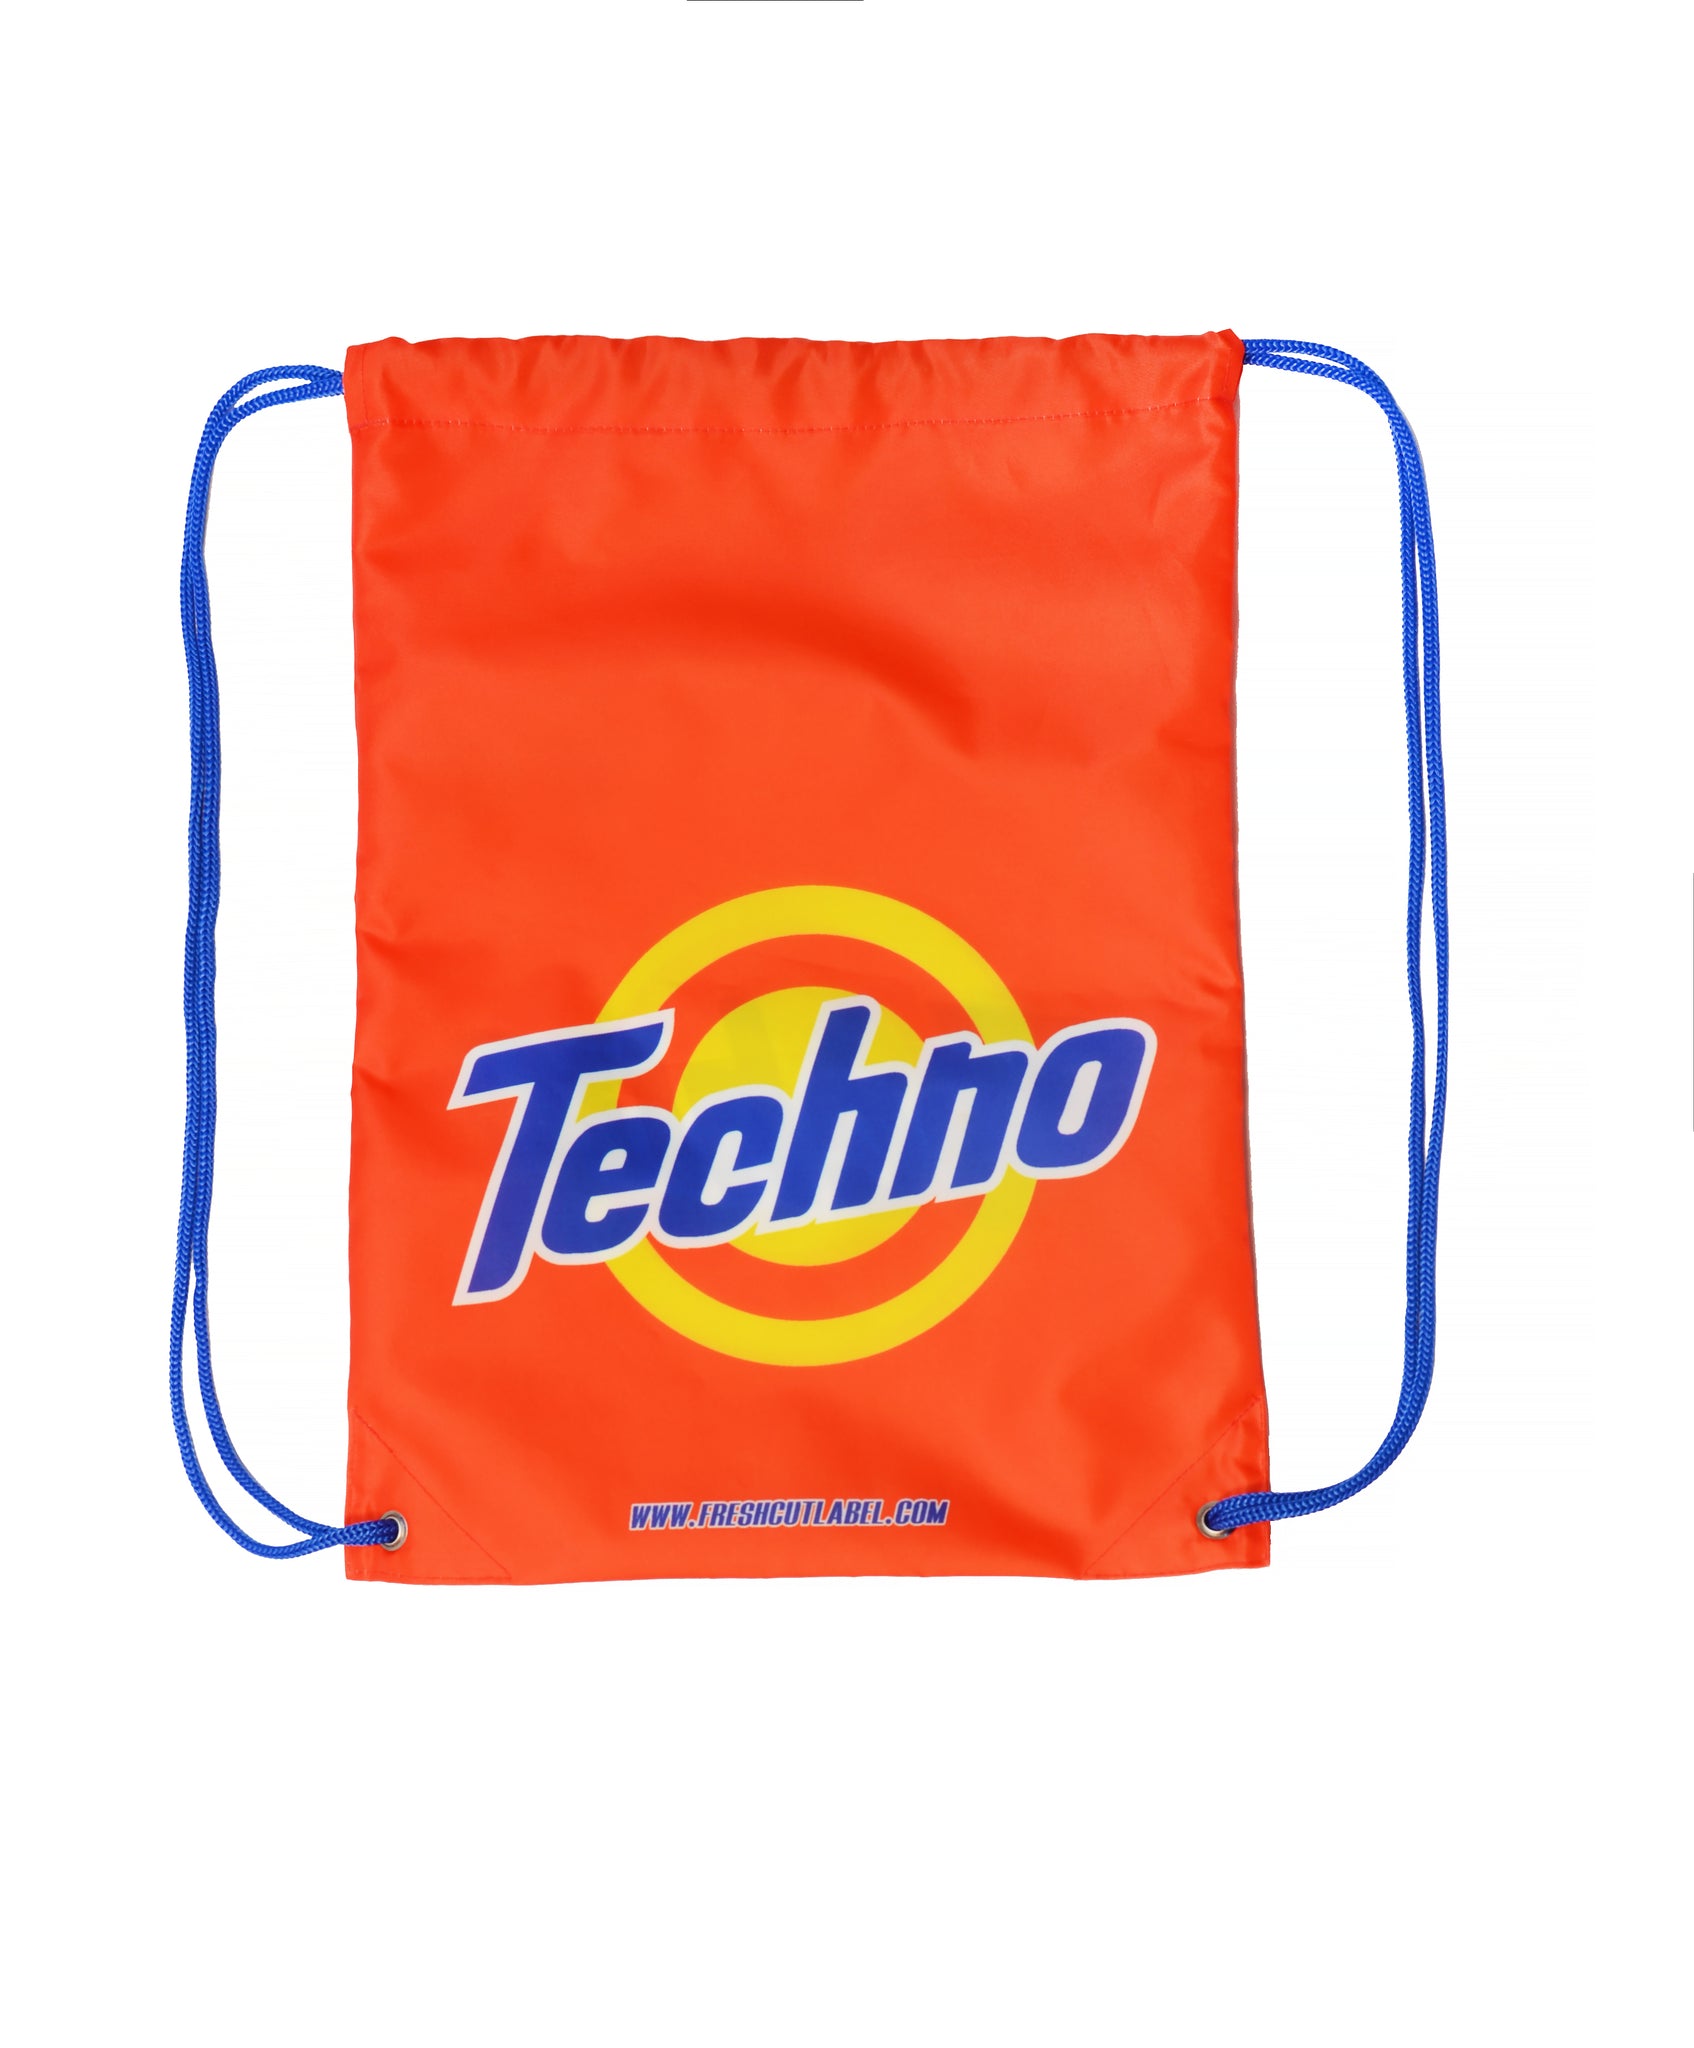 Techno Powder - Рюкзак